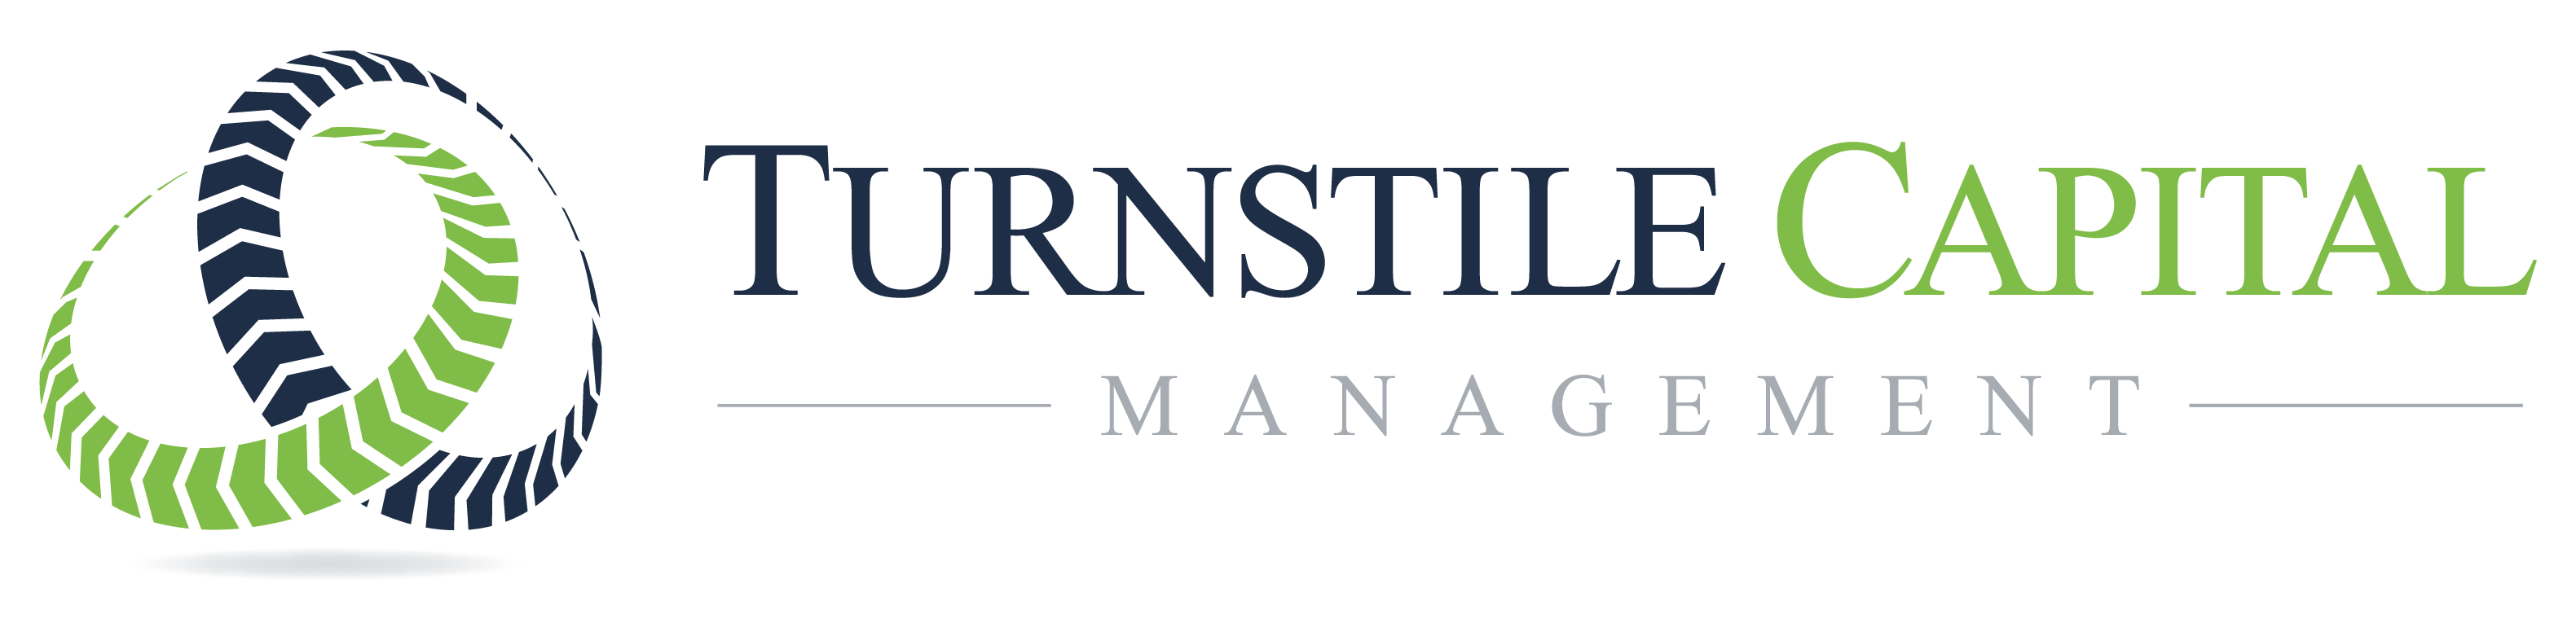 Turnstile Capital Management, LLC